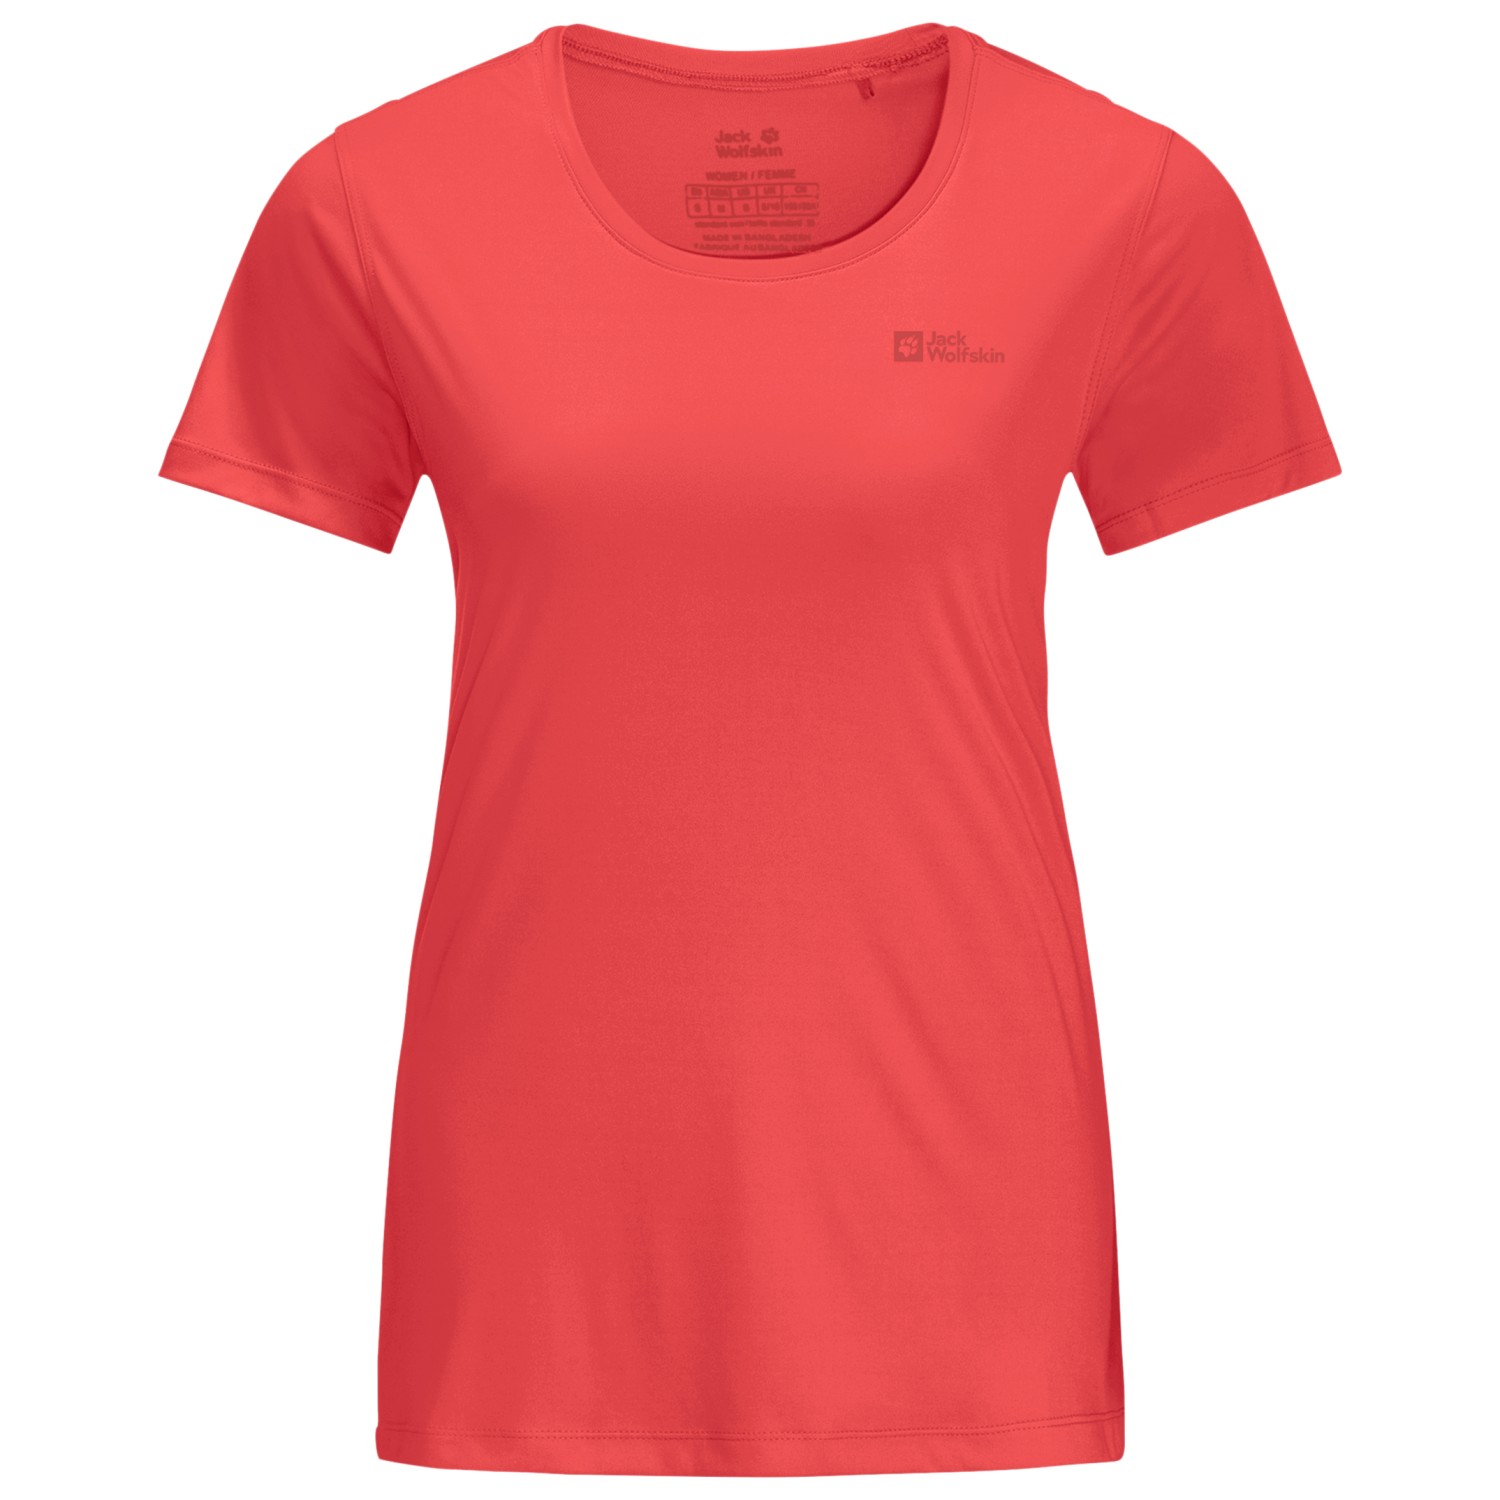 Функциональная рубашка Jack Wolfskin Women's Tech Tee, цвет Vibrant Red